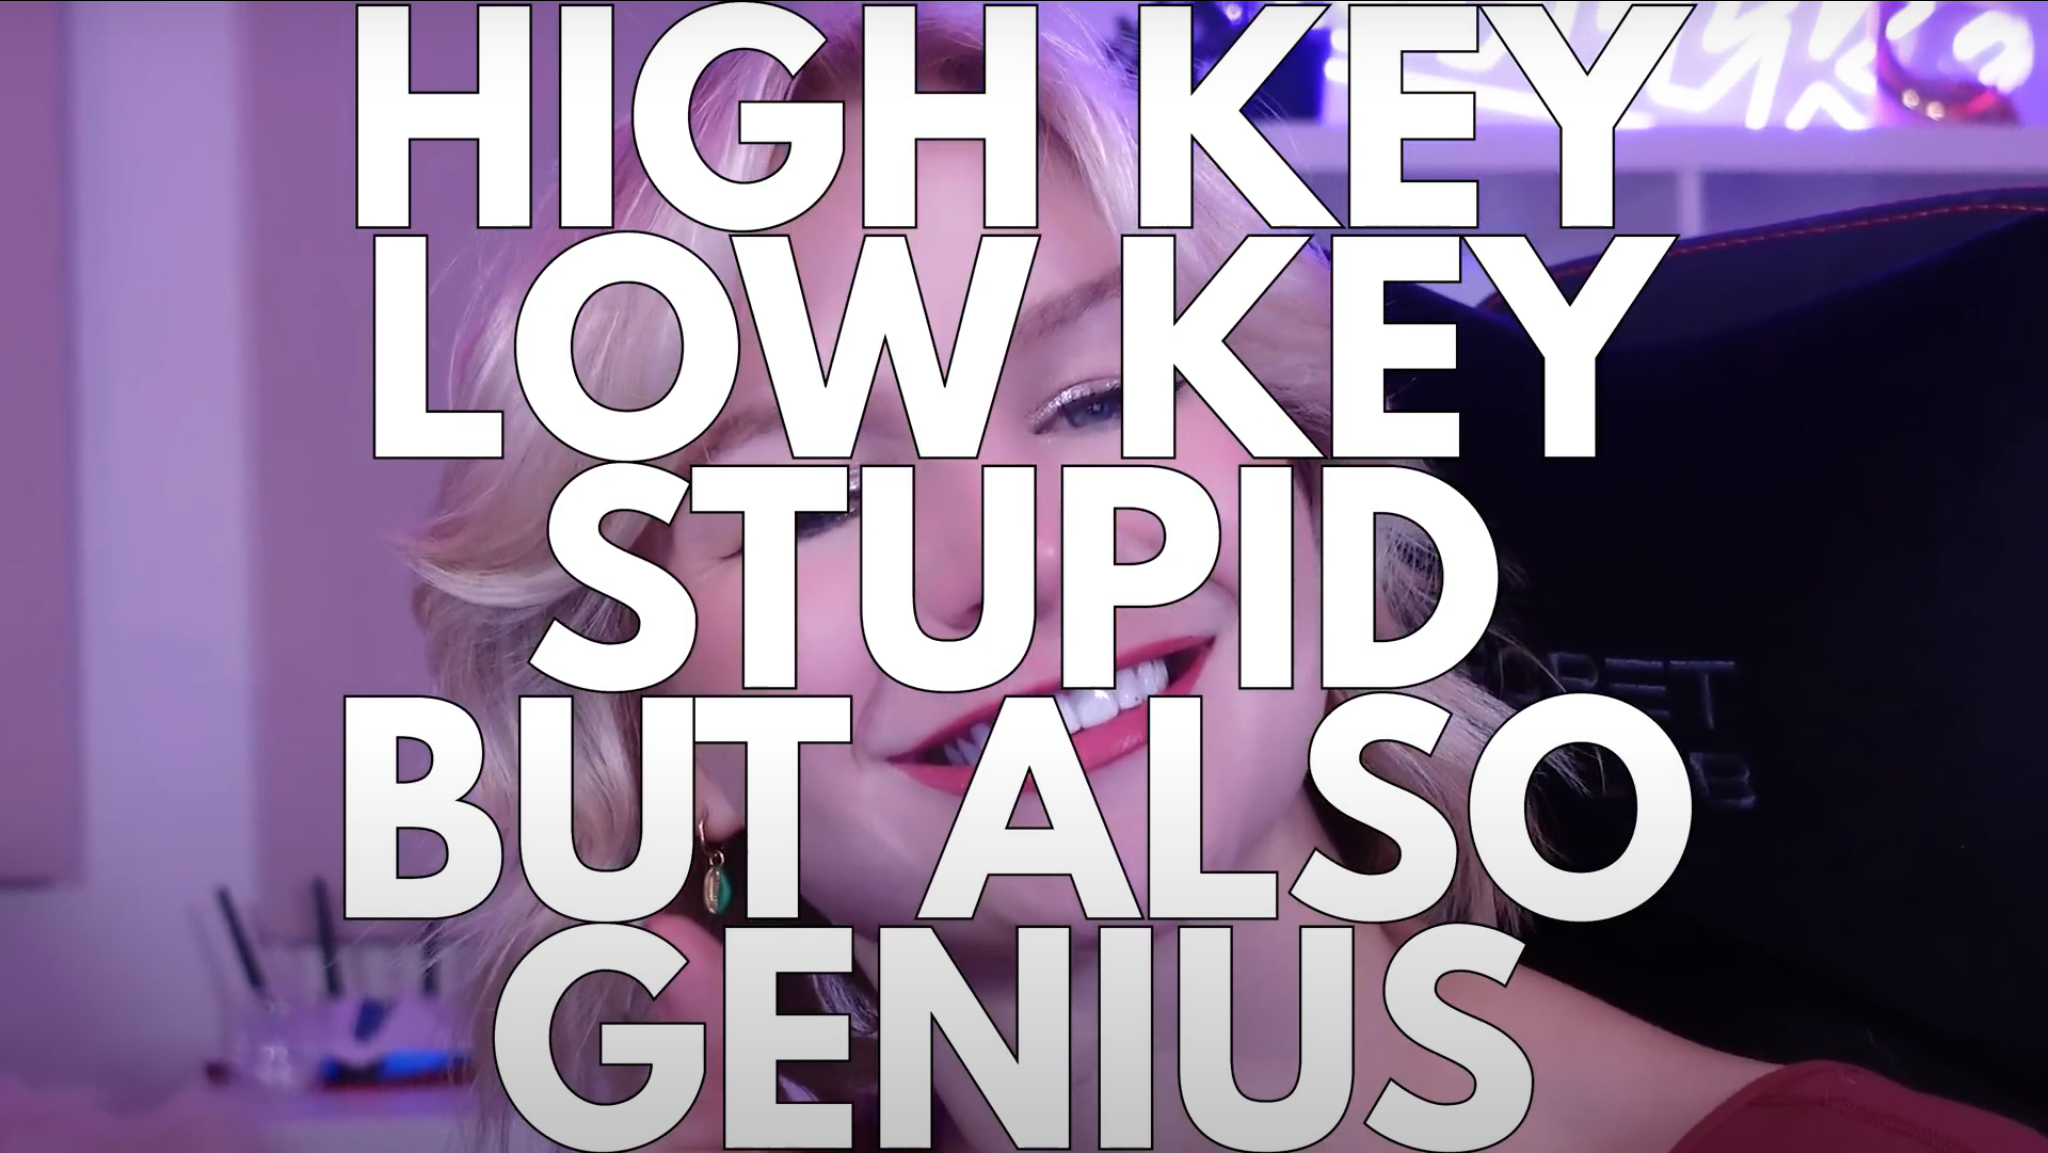 High key low key stupid but also genius Blank Meme Template